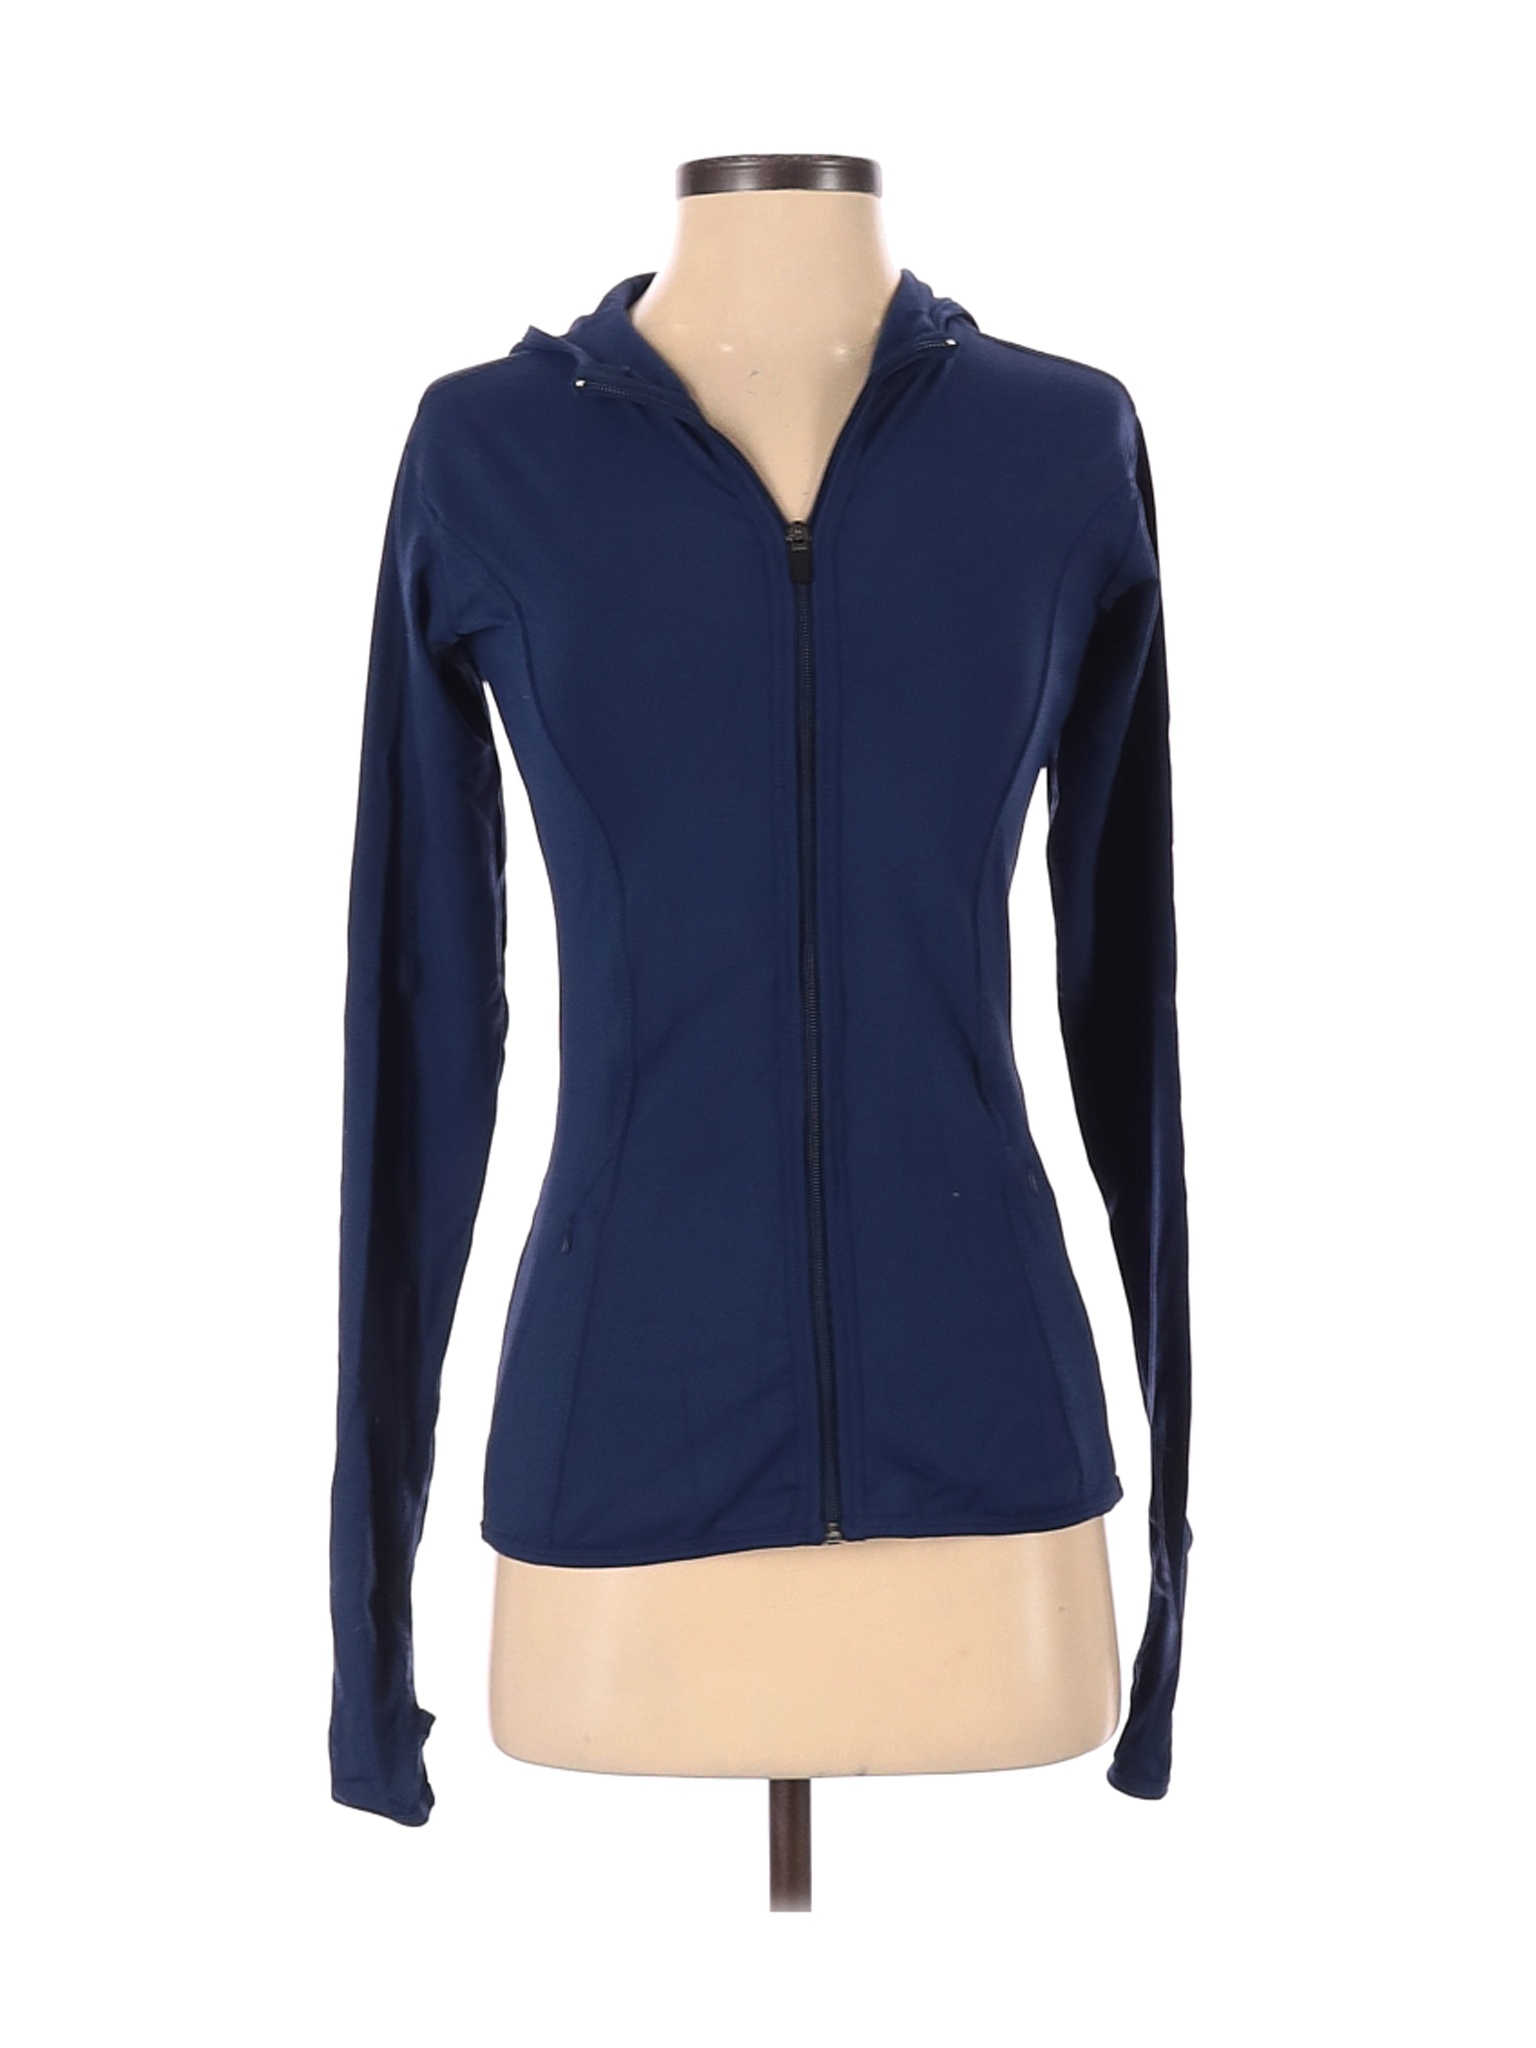 Assorted Brands Women Blue Track Jacket XS | eBay